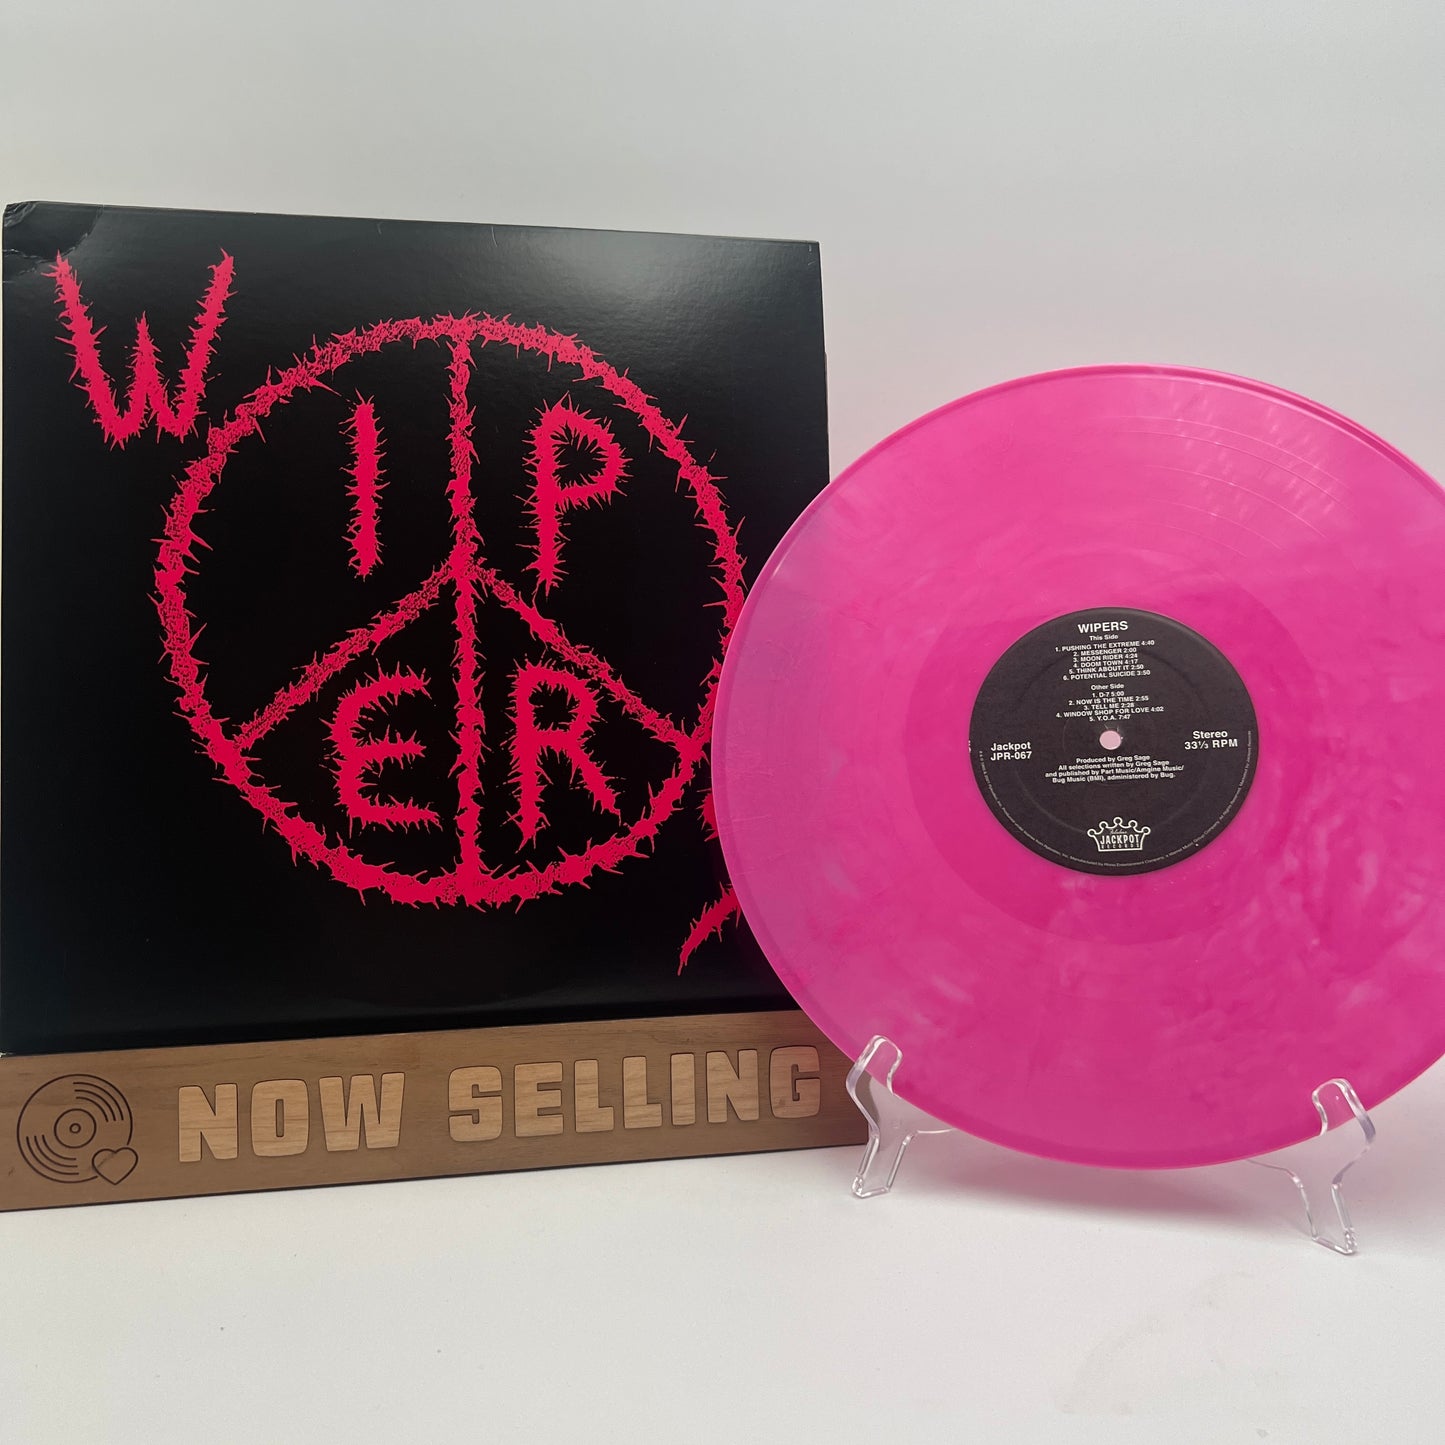 Wipers - Tour 1984 Vinyl LP Reissue Pink Marbled